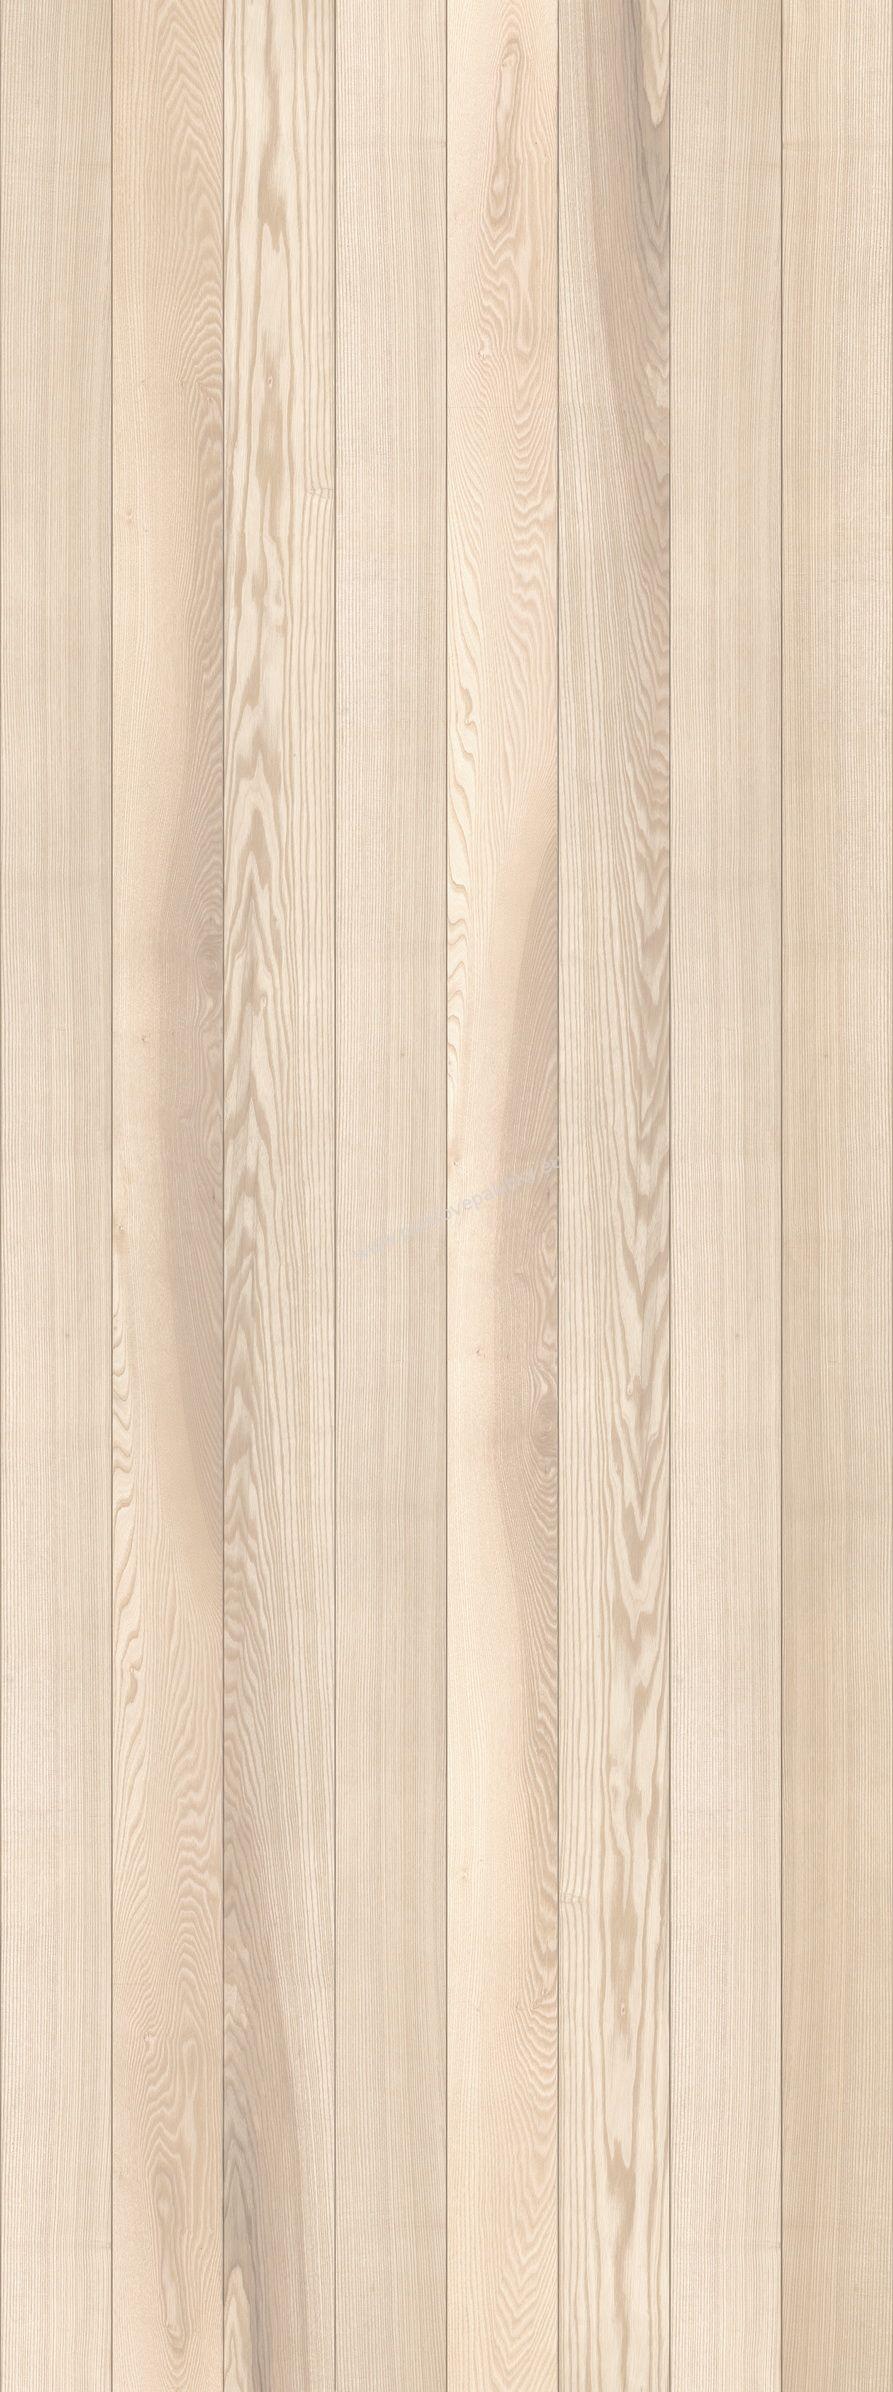 Interiérové panely Motivo - Toffy Wood